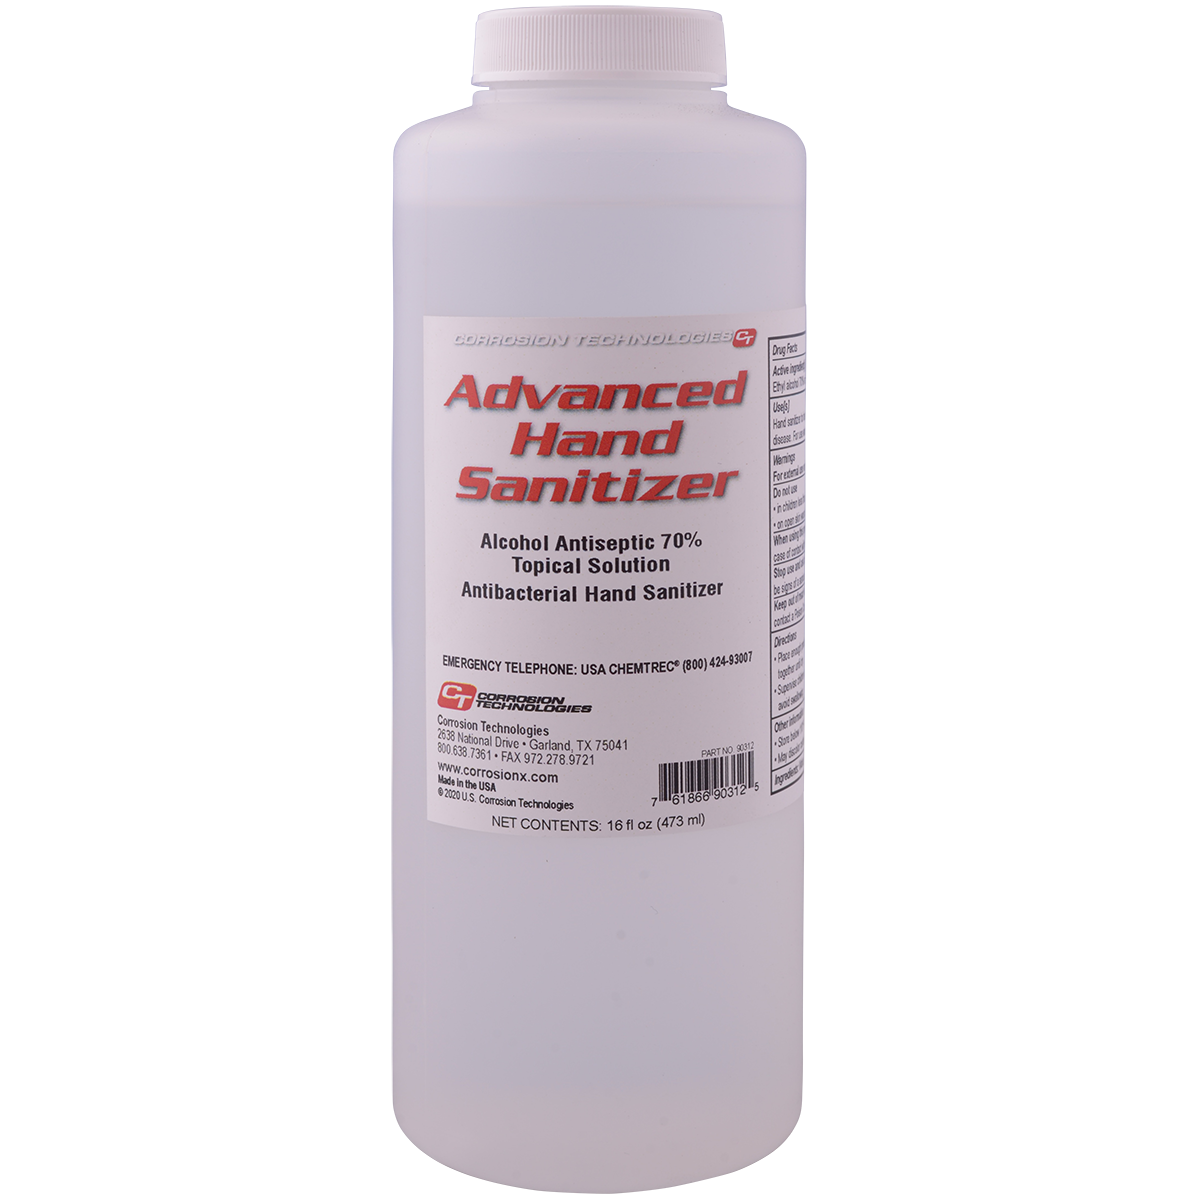 Hand Sanitizer Gel advanced formula